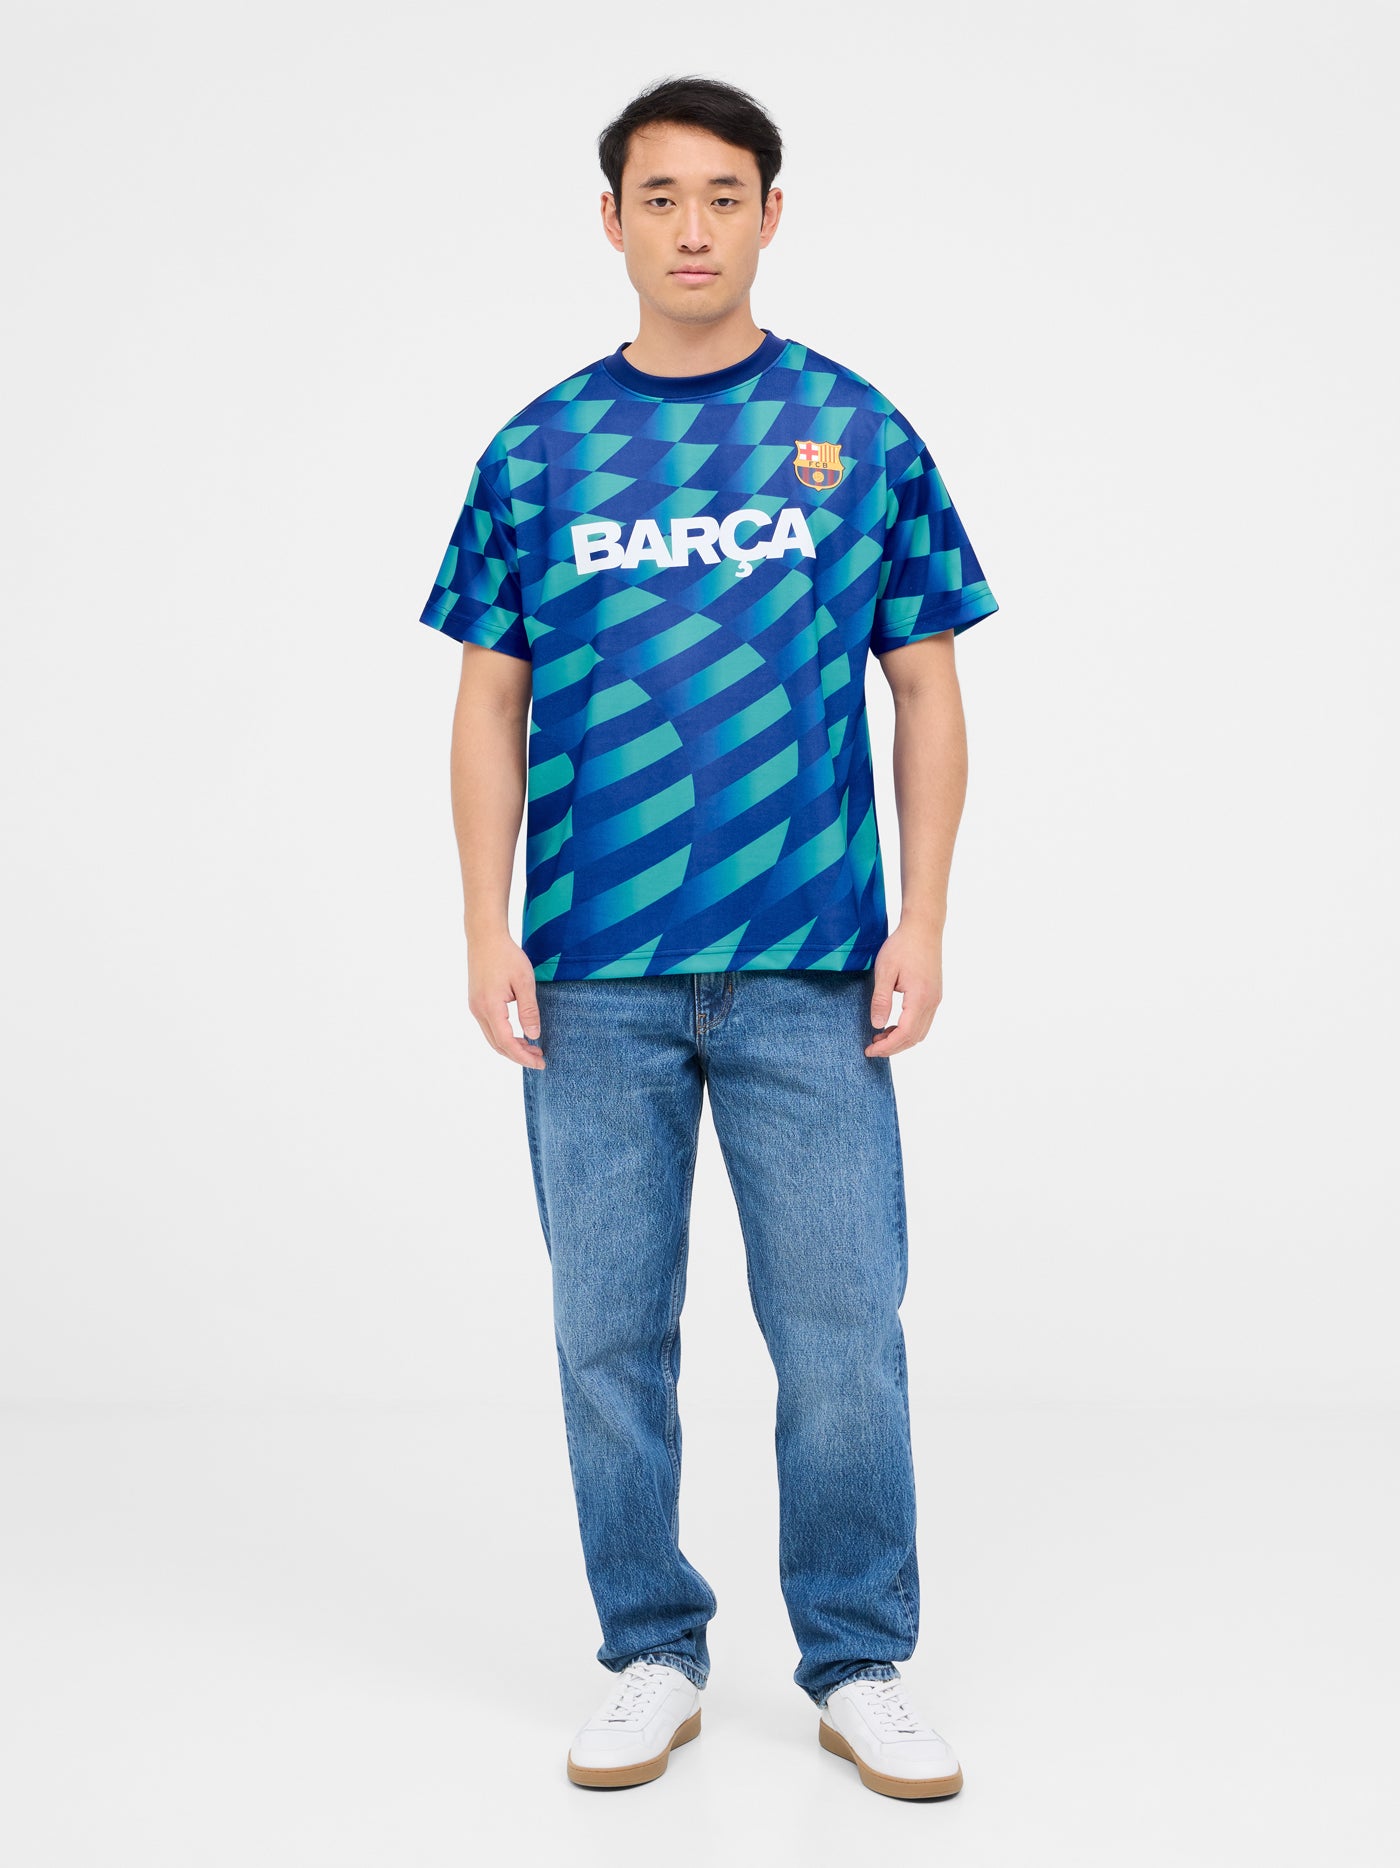 Print turquoise T-shirt crest Barça